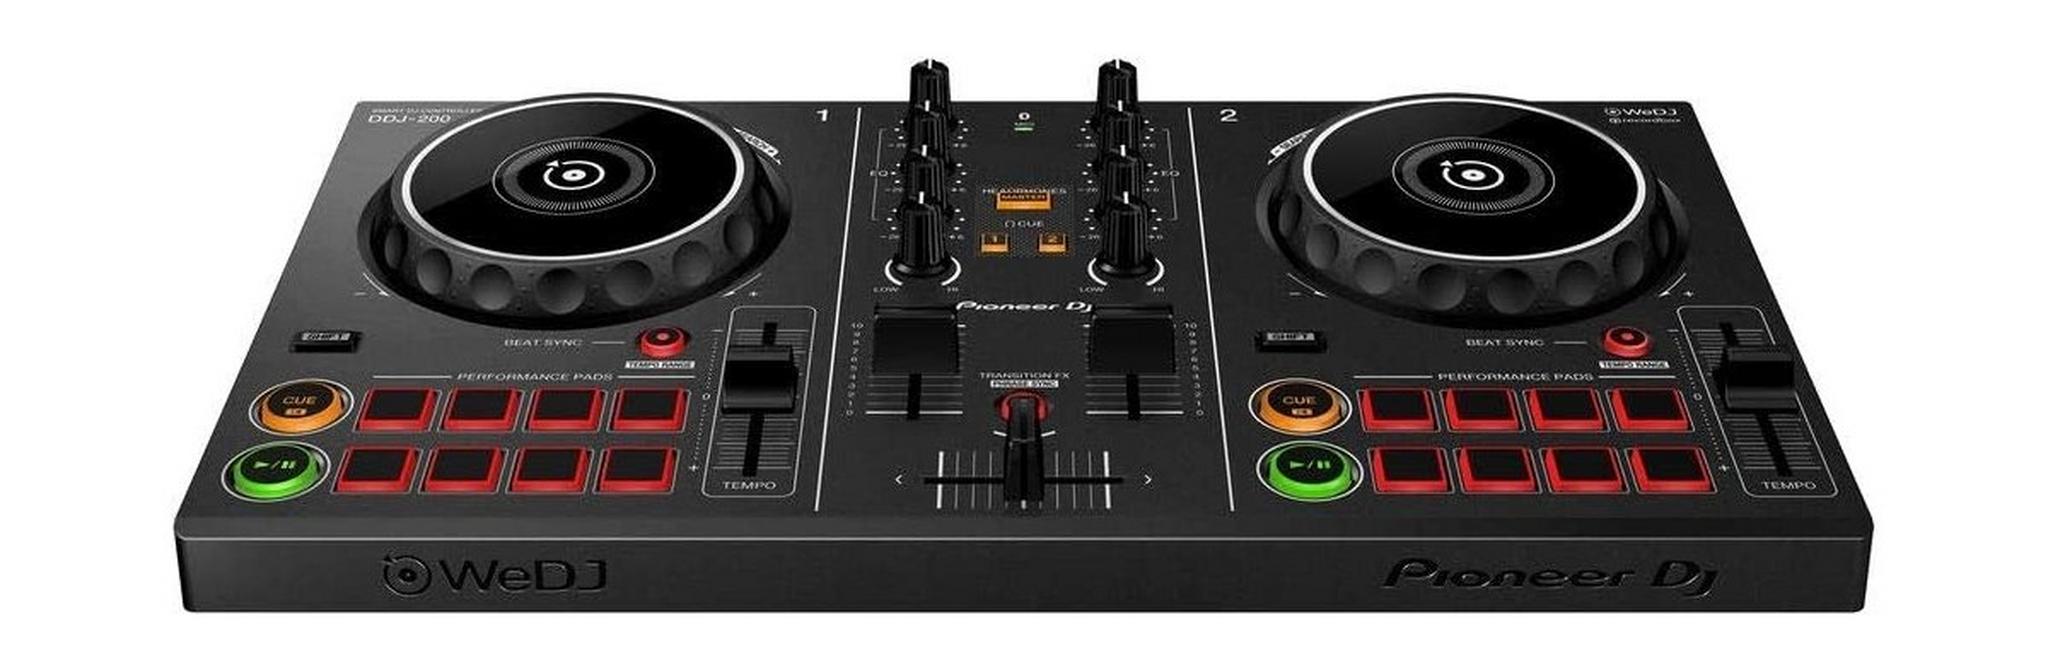 Pioneer DDJ-200 All-In-One DJ Controller